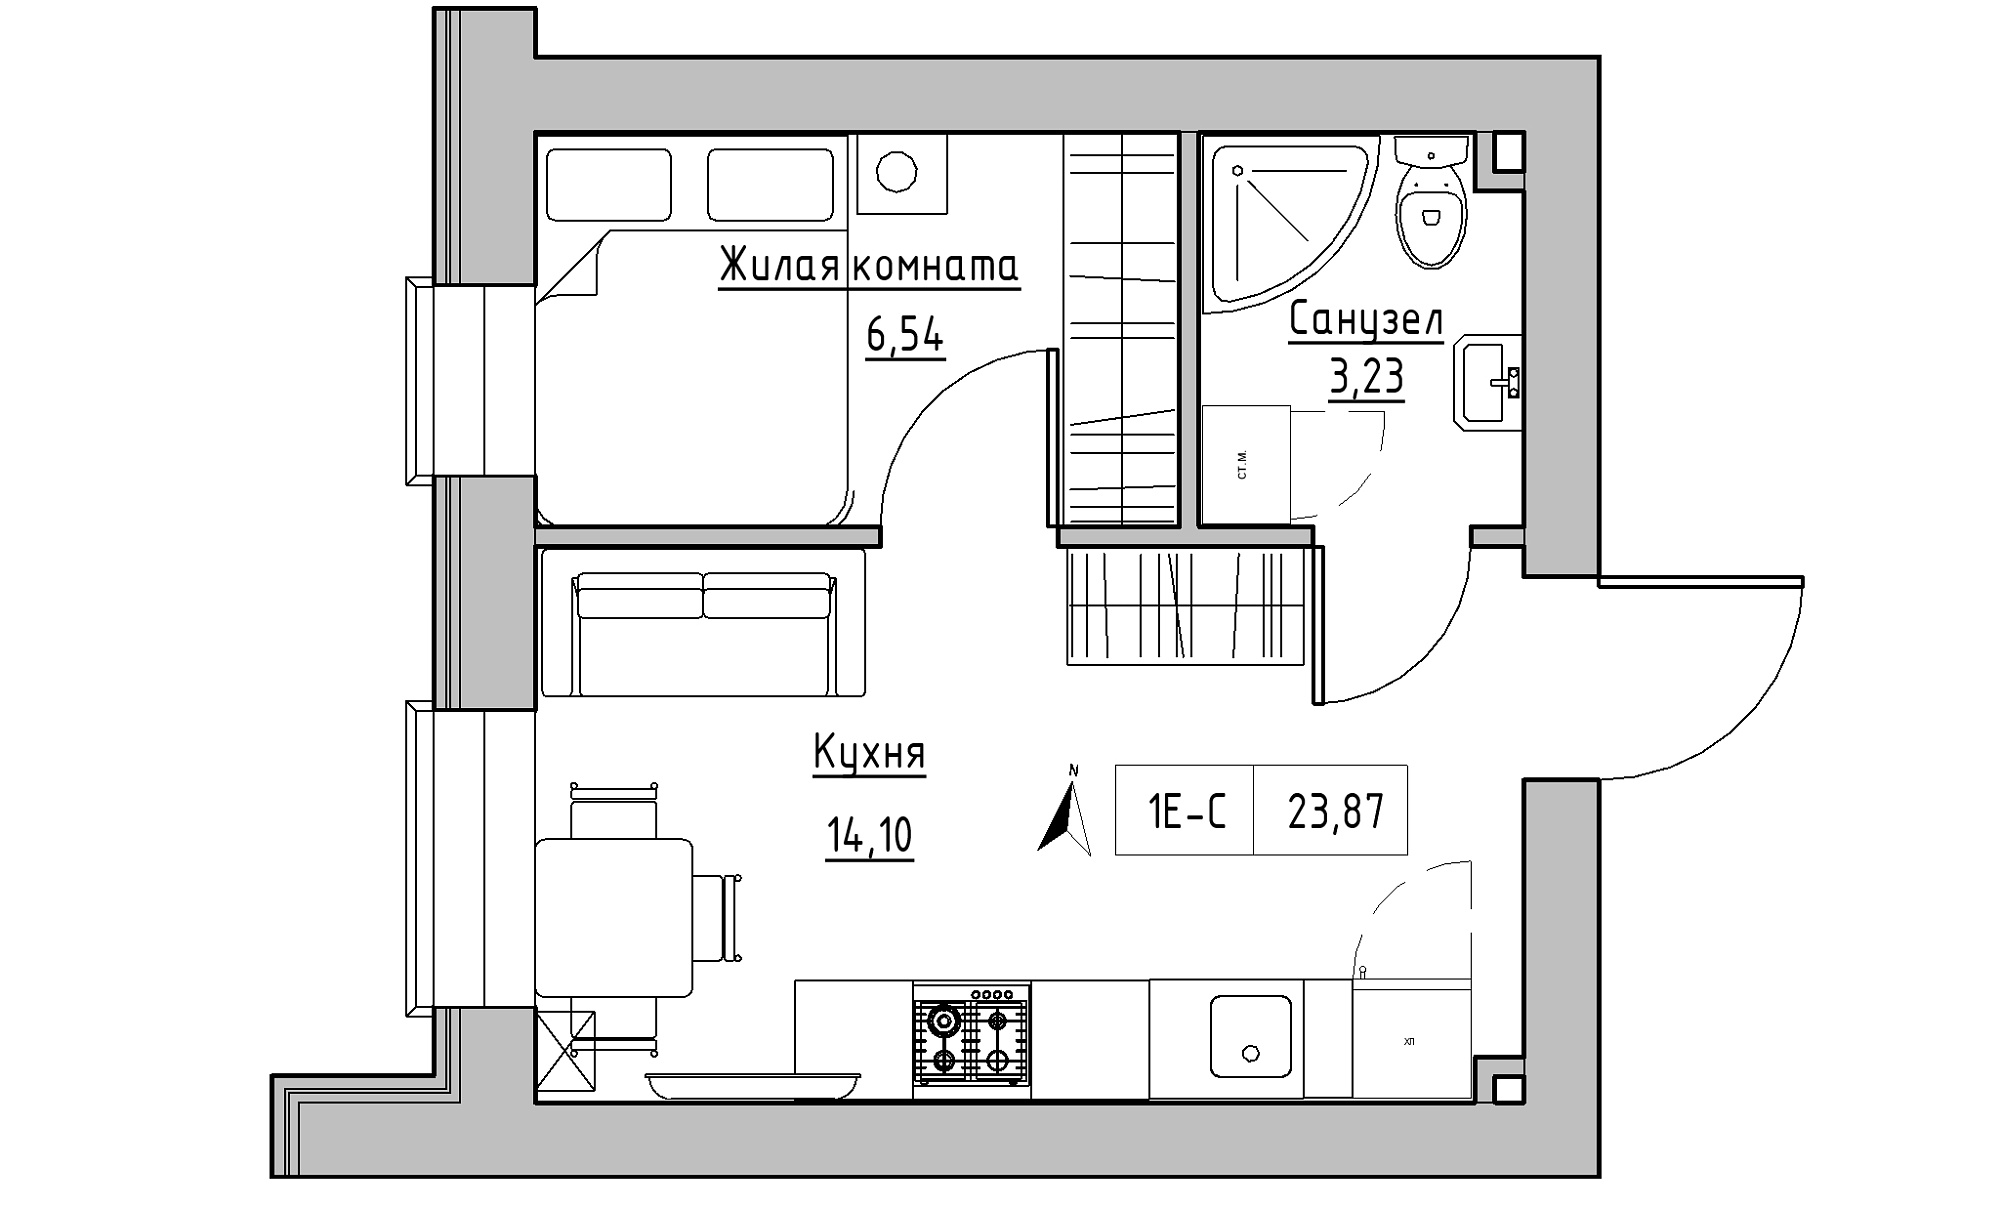 Planning 1-rm flats area 23.87m2, KS-016-02/0012.